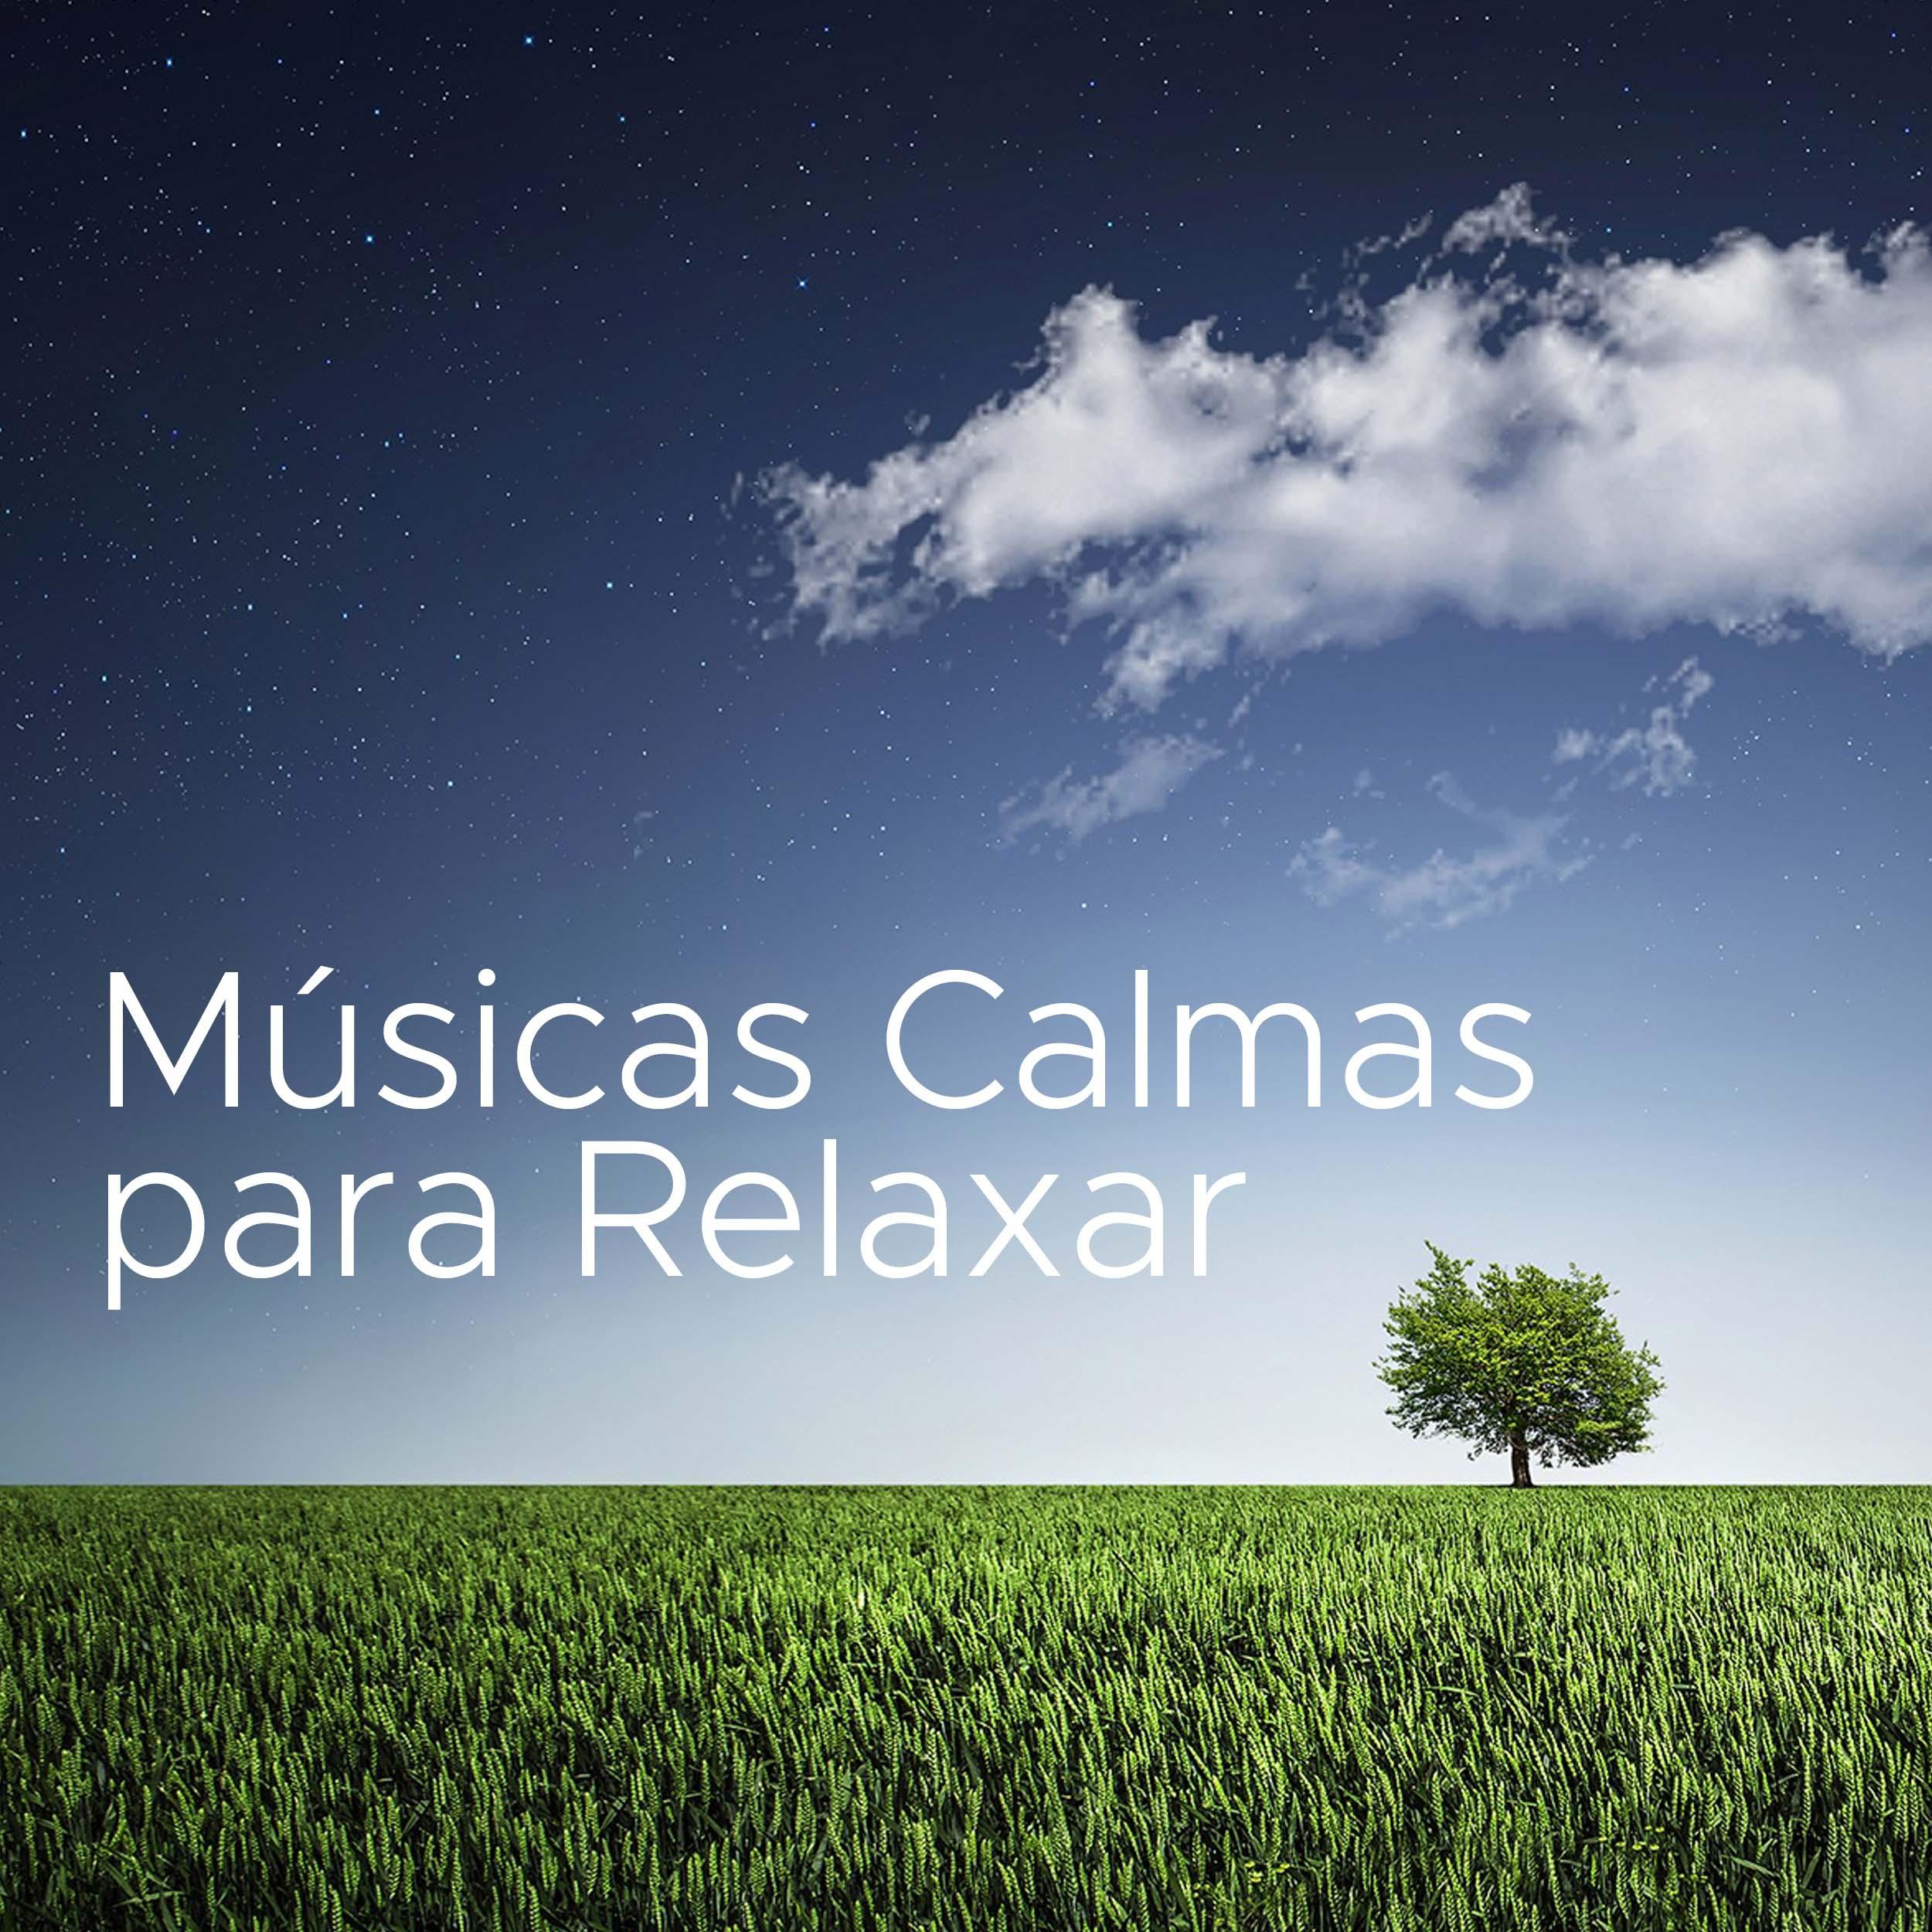 Musicas Calmas para Relaxar - Formas de Relaxar a Mente